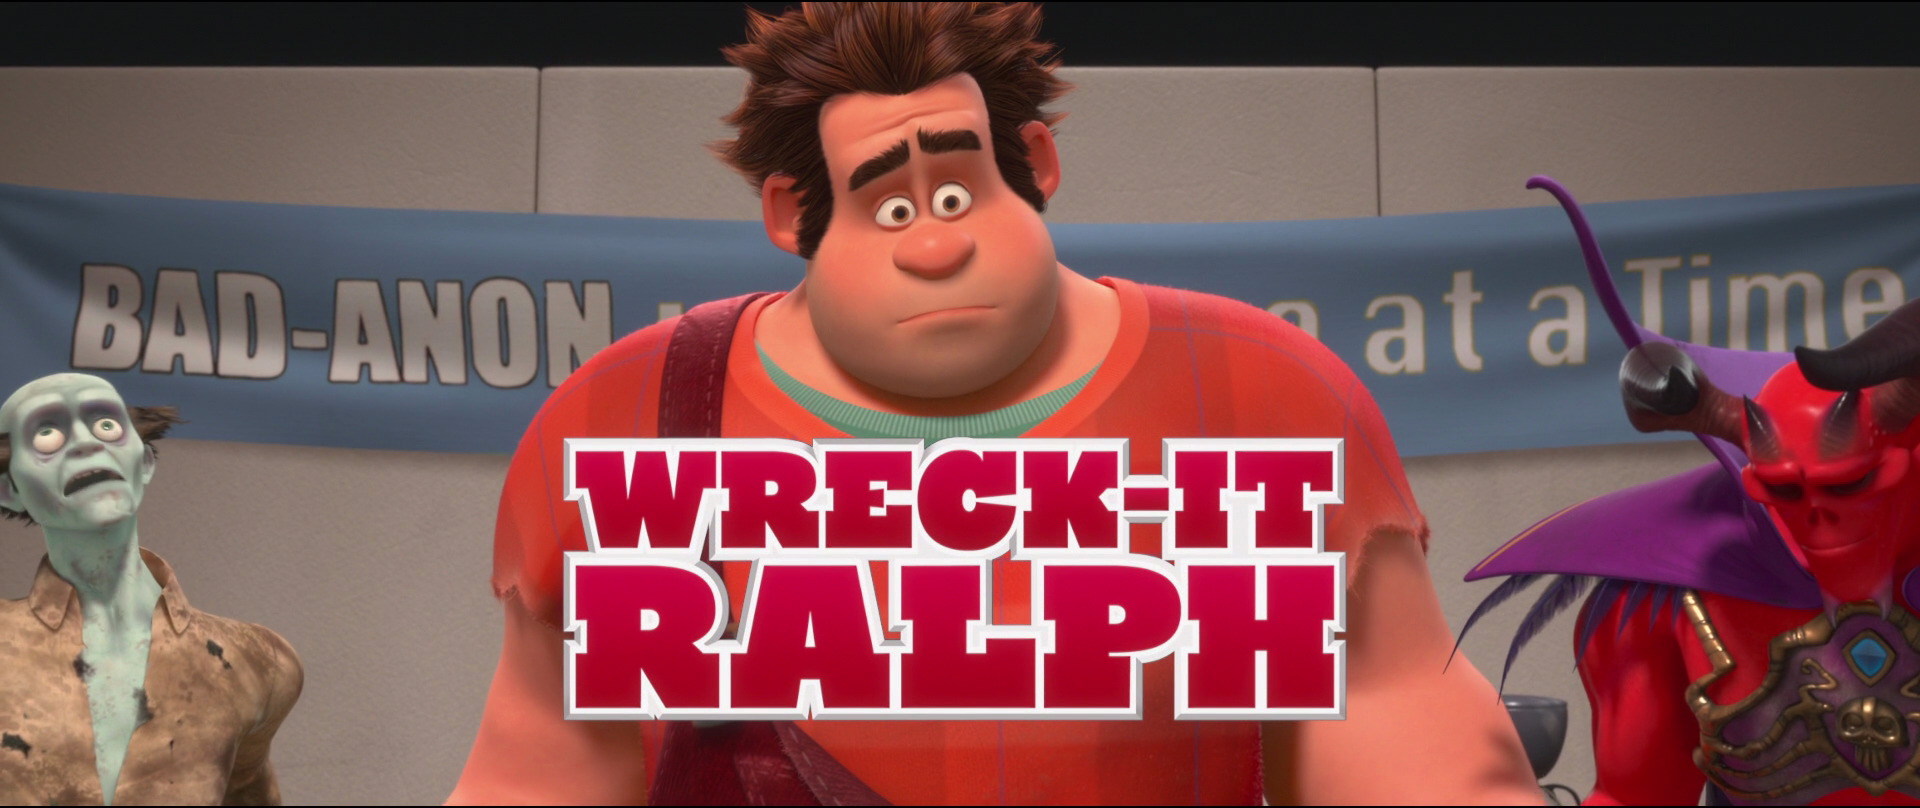 wreck it ralph free online full movie